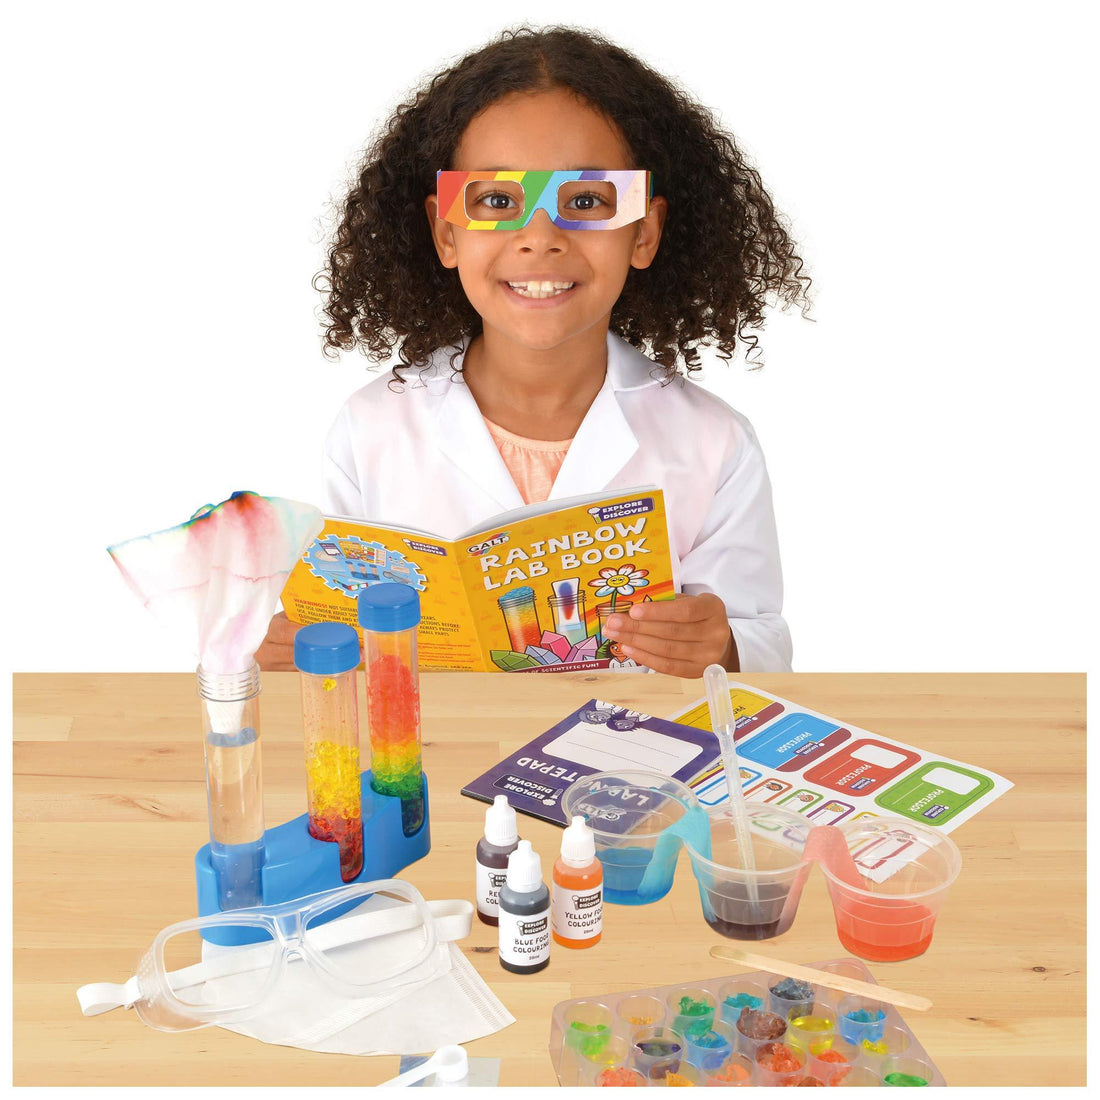 Galt Toys Rainbow Lab Science Kite For Kids - Kitty Hawk Kites Online Store